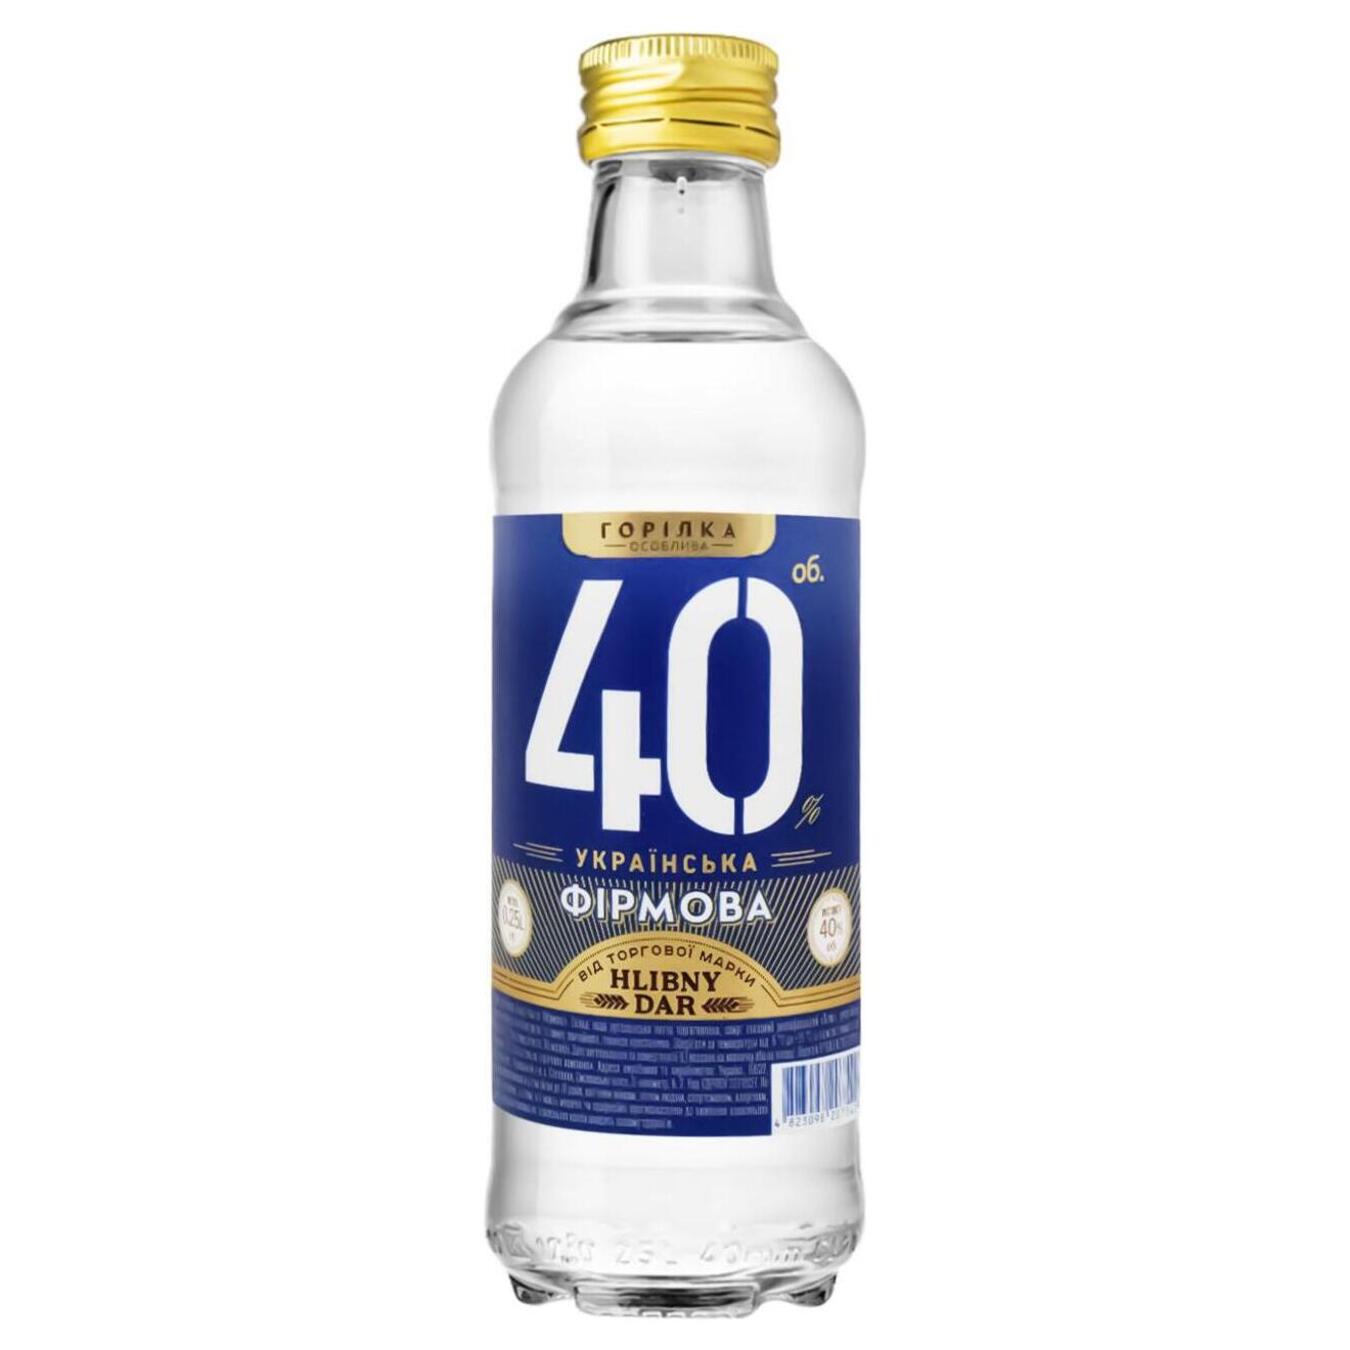 Vodka Ukrainian Firmova 40% 0.25 l